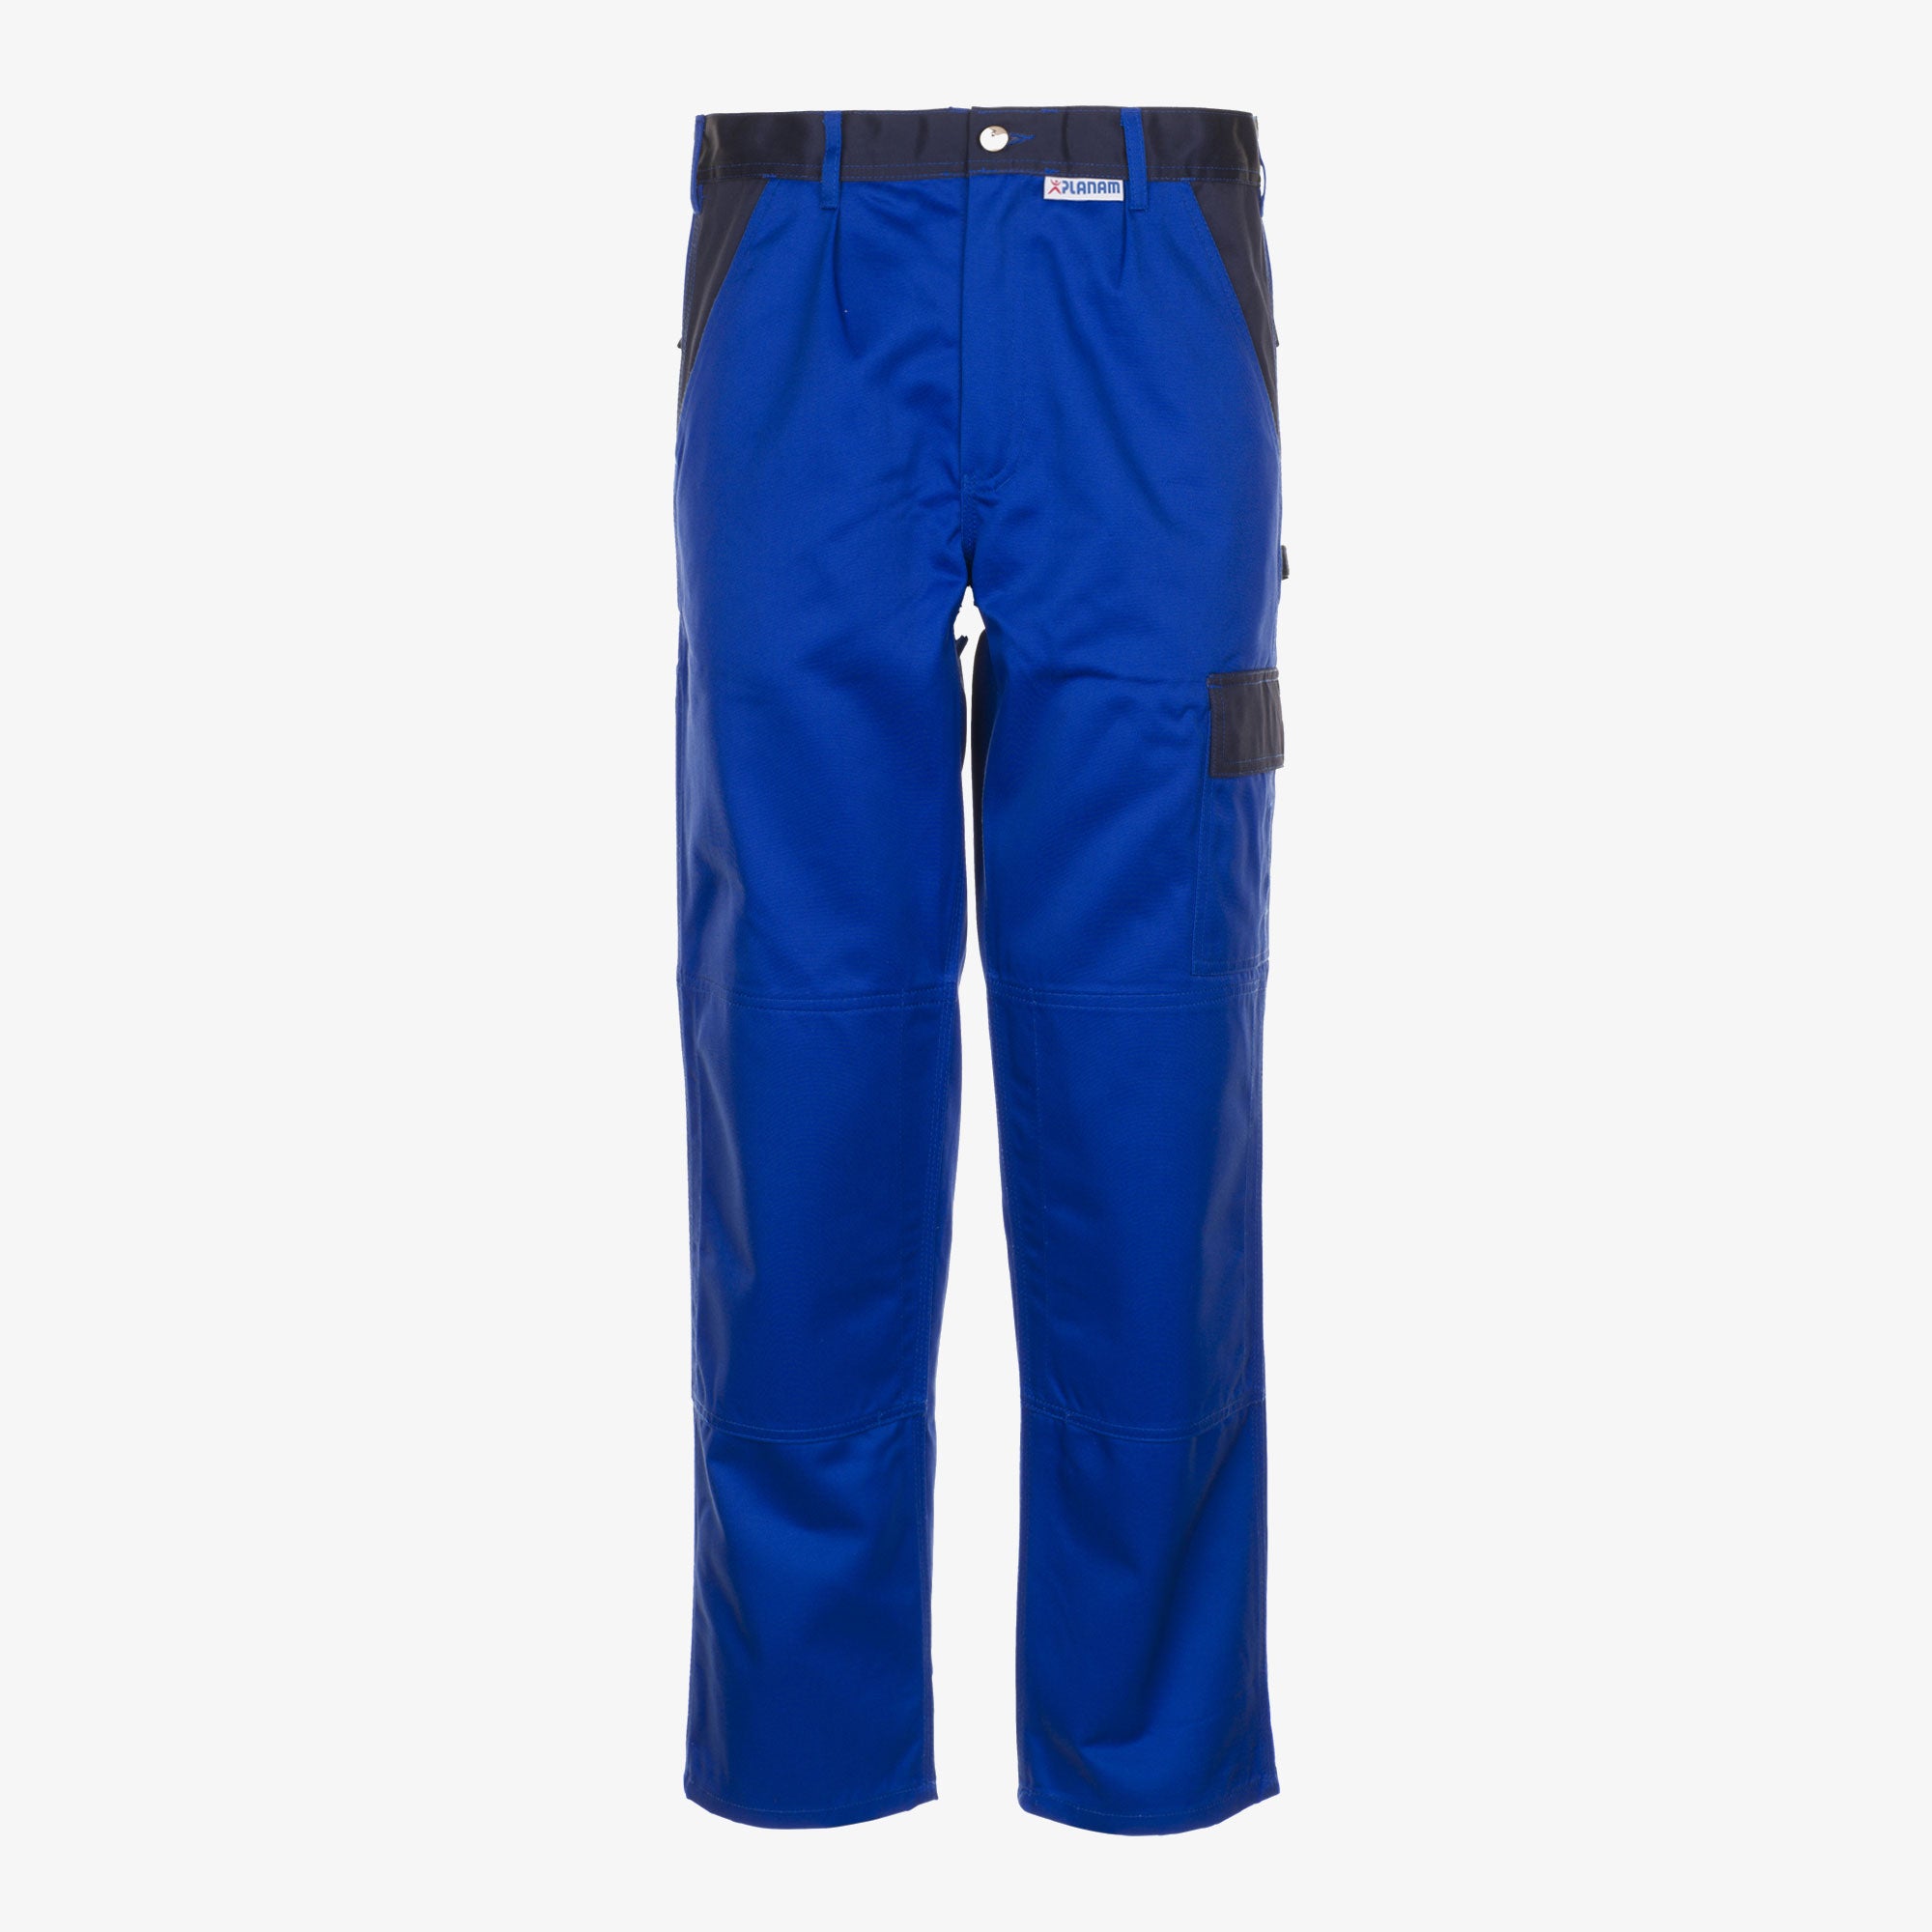 PLANAM Tristep 1211 Plave radne hlače